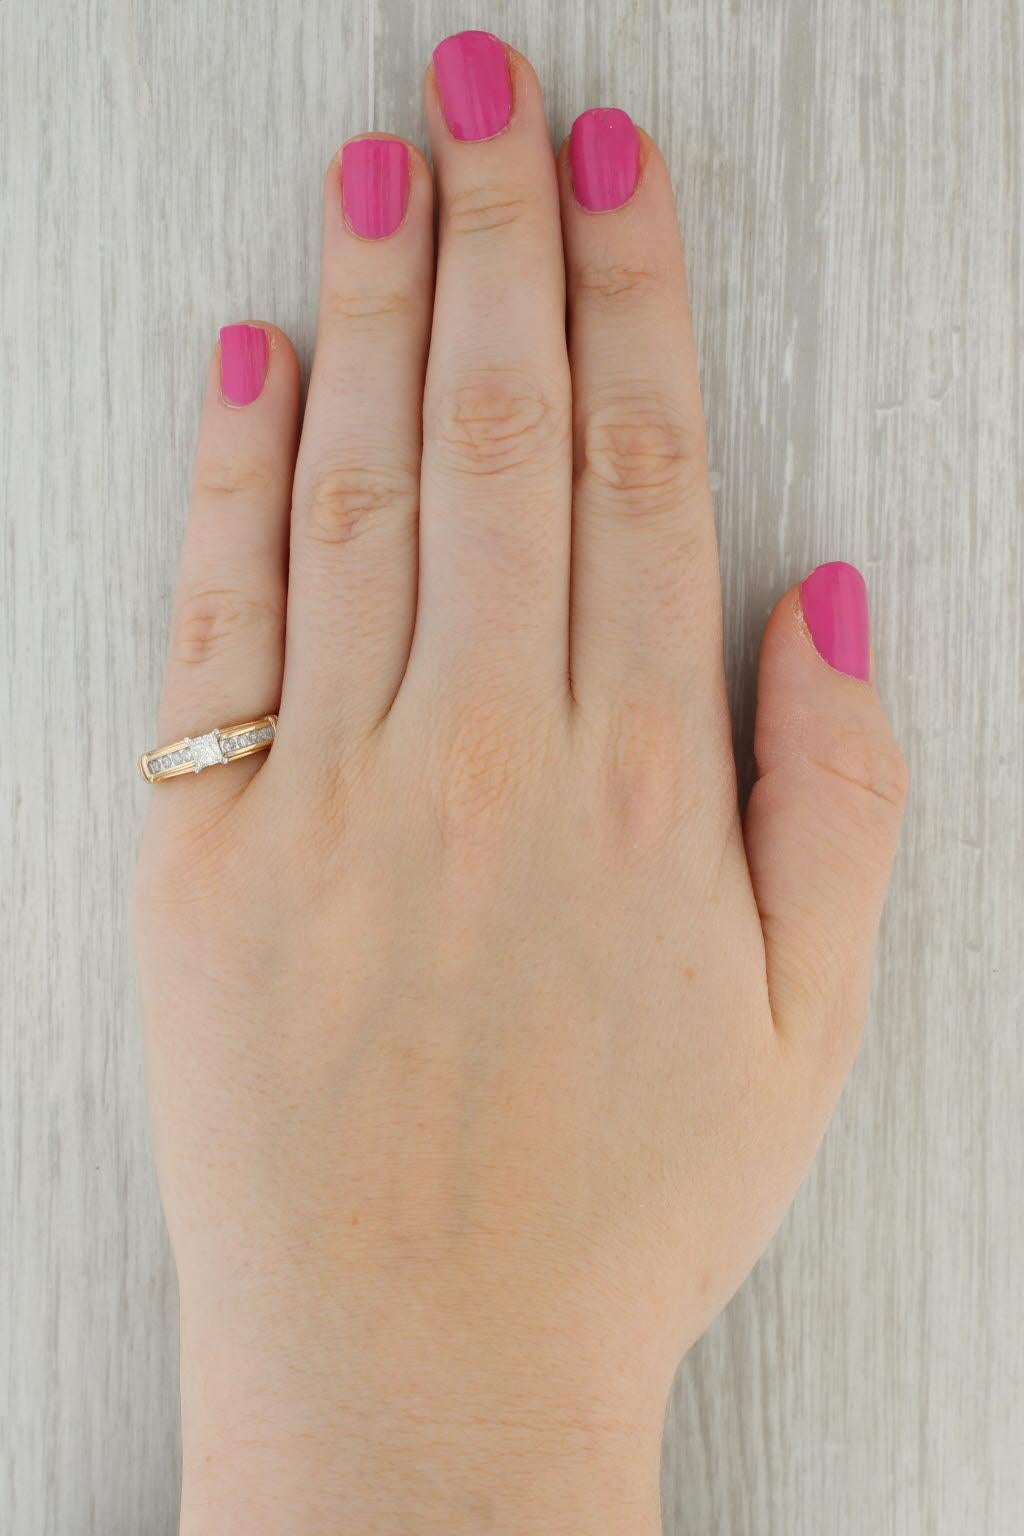 0.47ctw Princess Diamond Engagement Ring 14k Yellow Gold Size 7 2